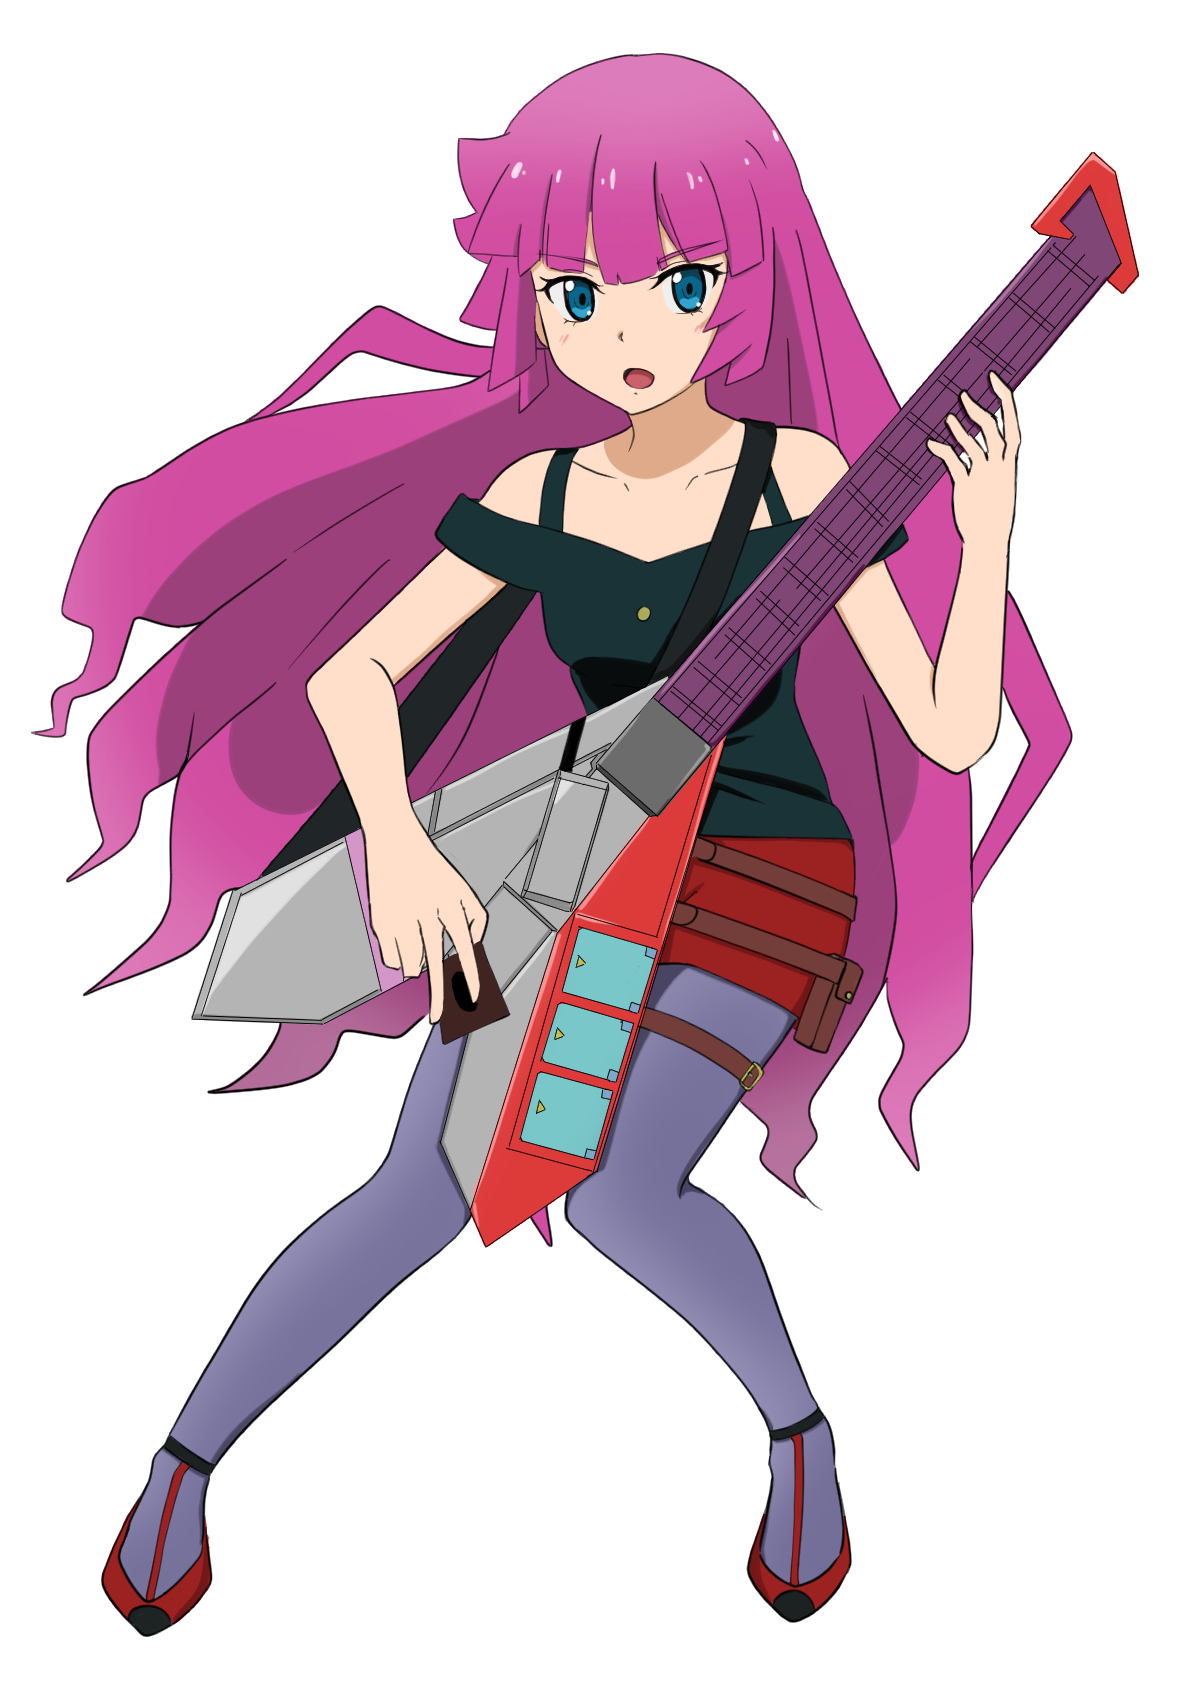 Anime 1191x1684 anime anime girls Yu-Gi-Oh! Yu-Gi-Oh! SEVENS Romin Kirishima long hair pink hair electric guitar artwork digital art fan art duel disk